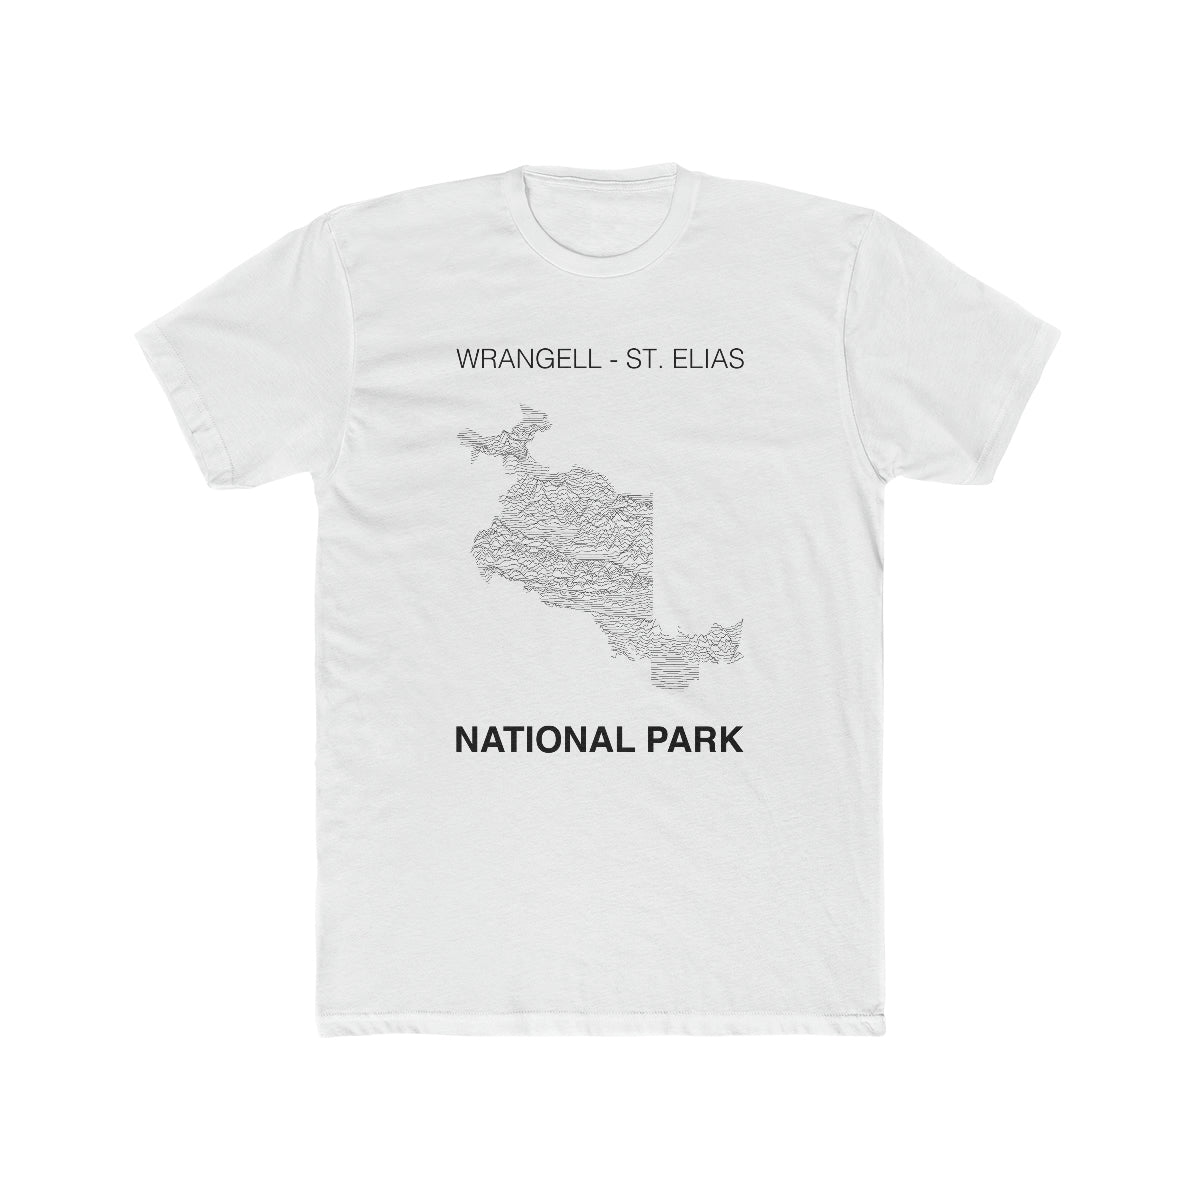 Wrangell St. Elias National Park T-Shirt Lines